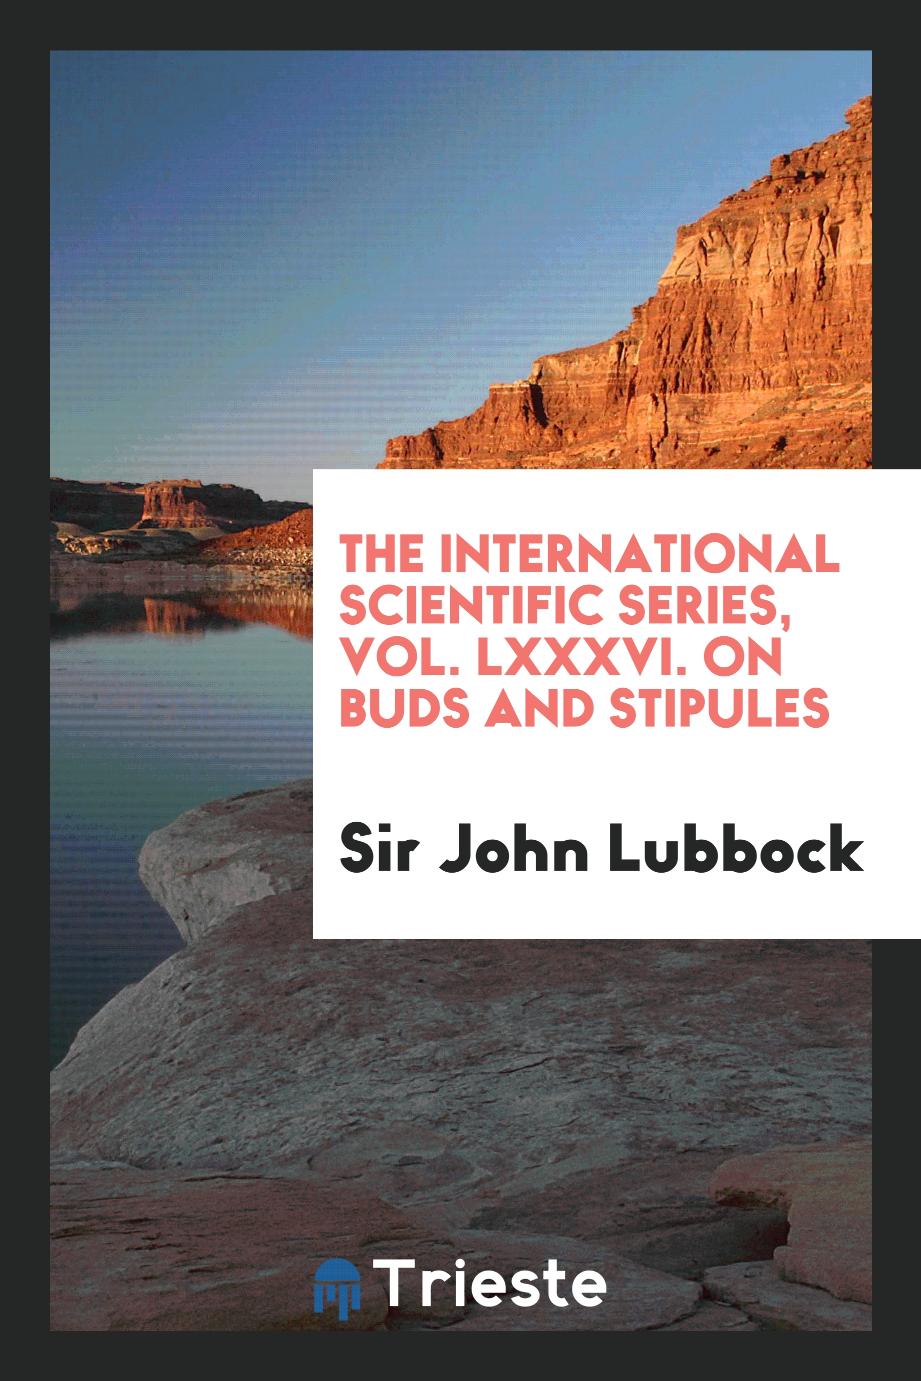 The international scientific series, Vol. LXXXVI. On buds and stipules